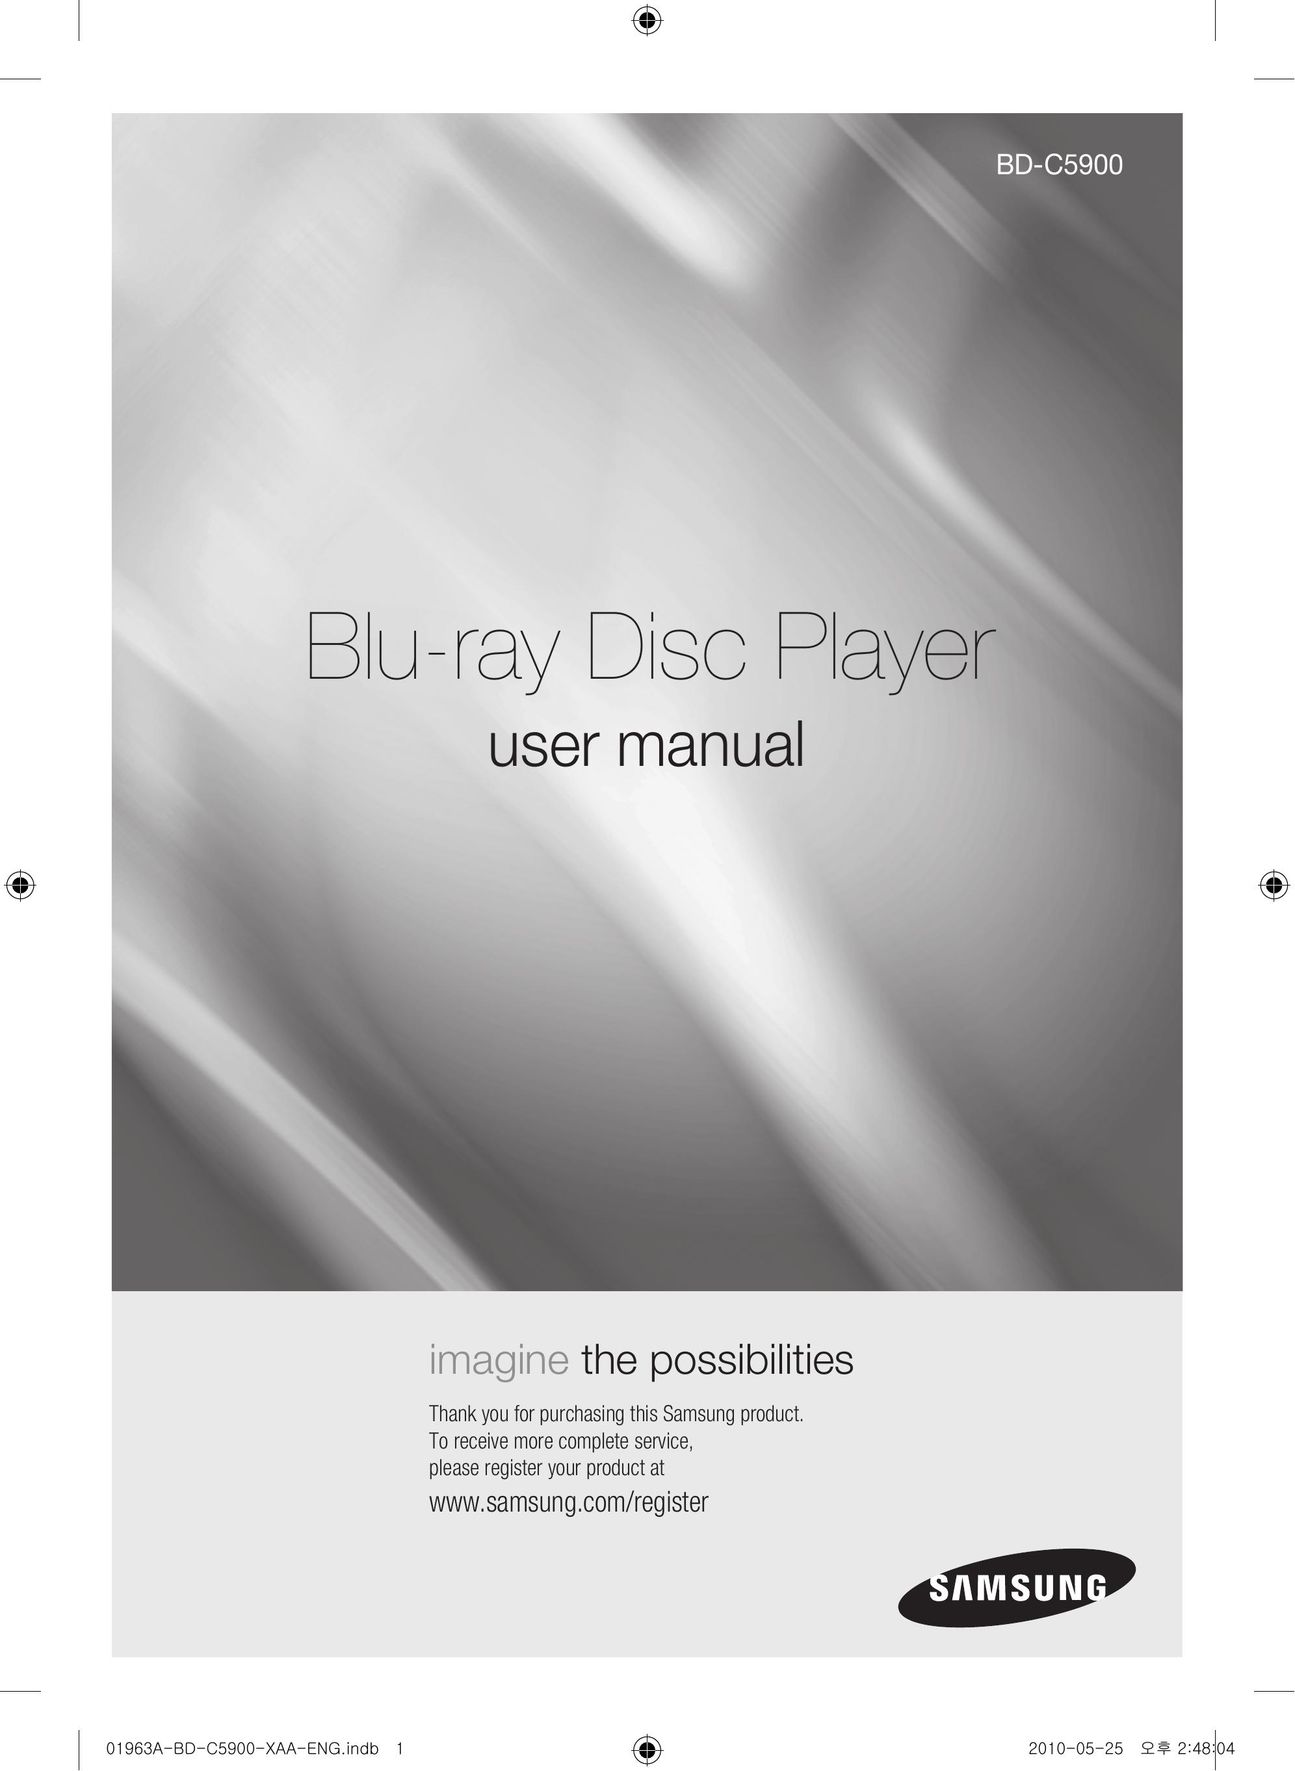 Samsung BD-C5900 Blu-ray Player User Manual